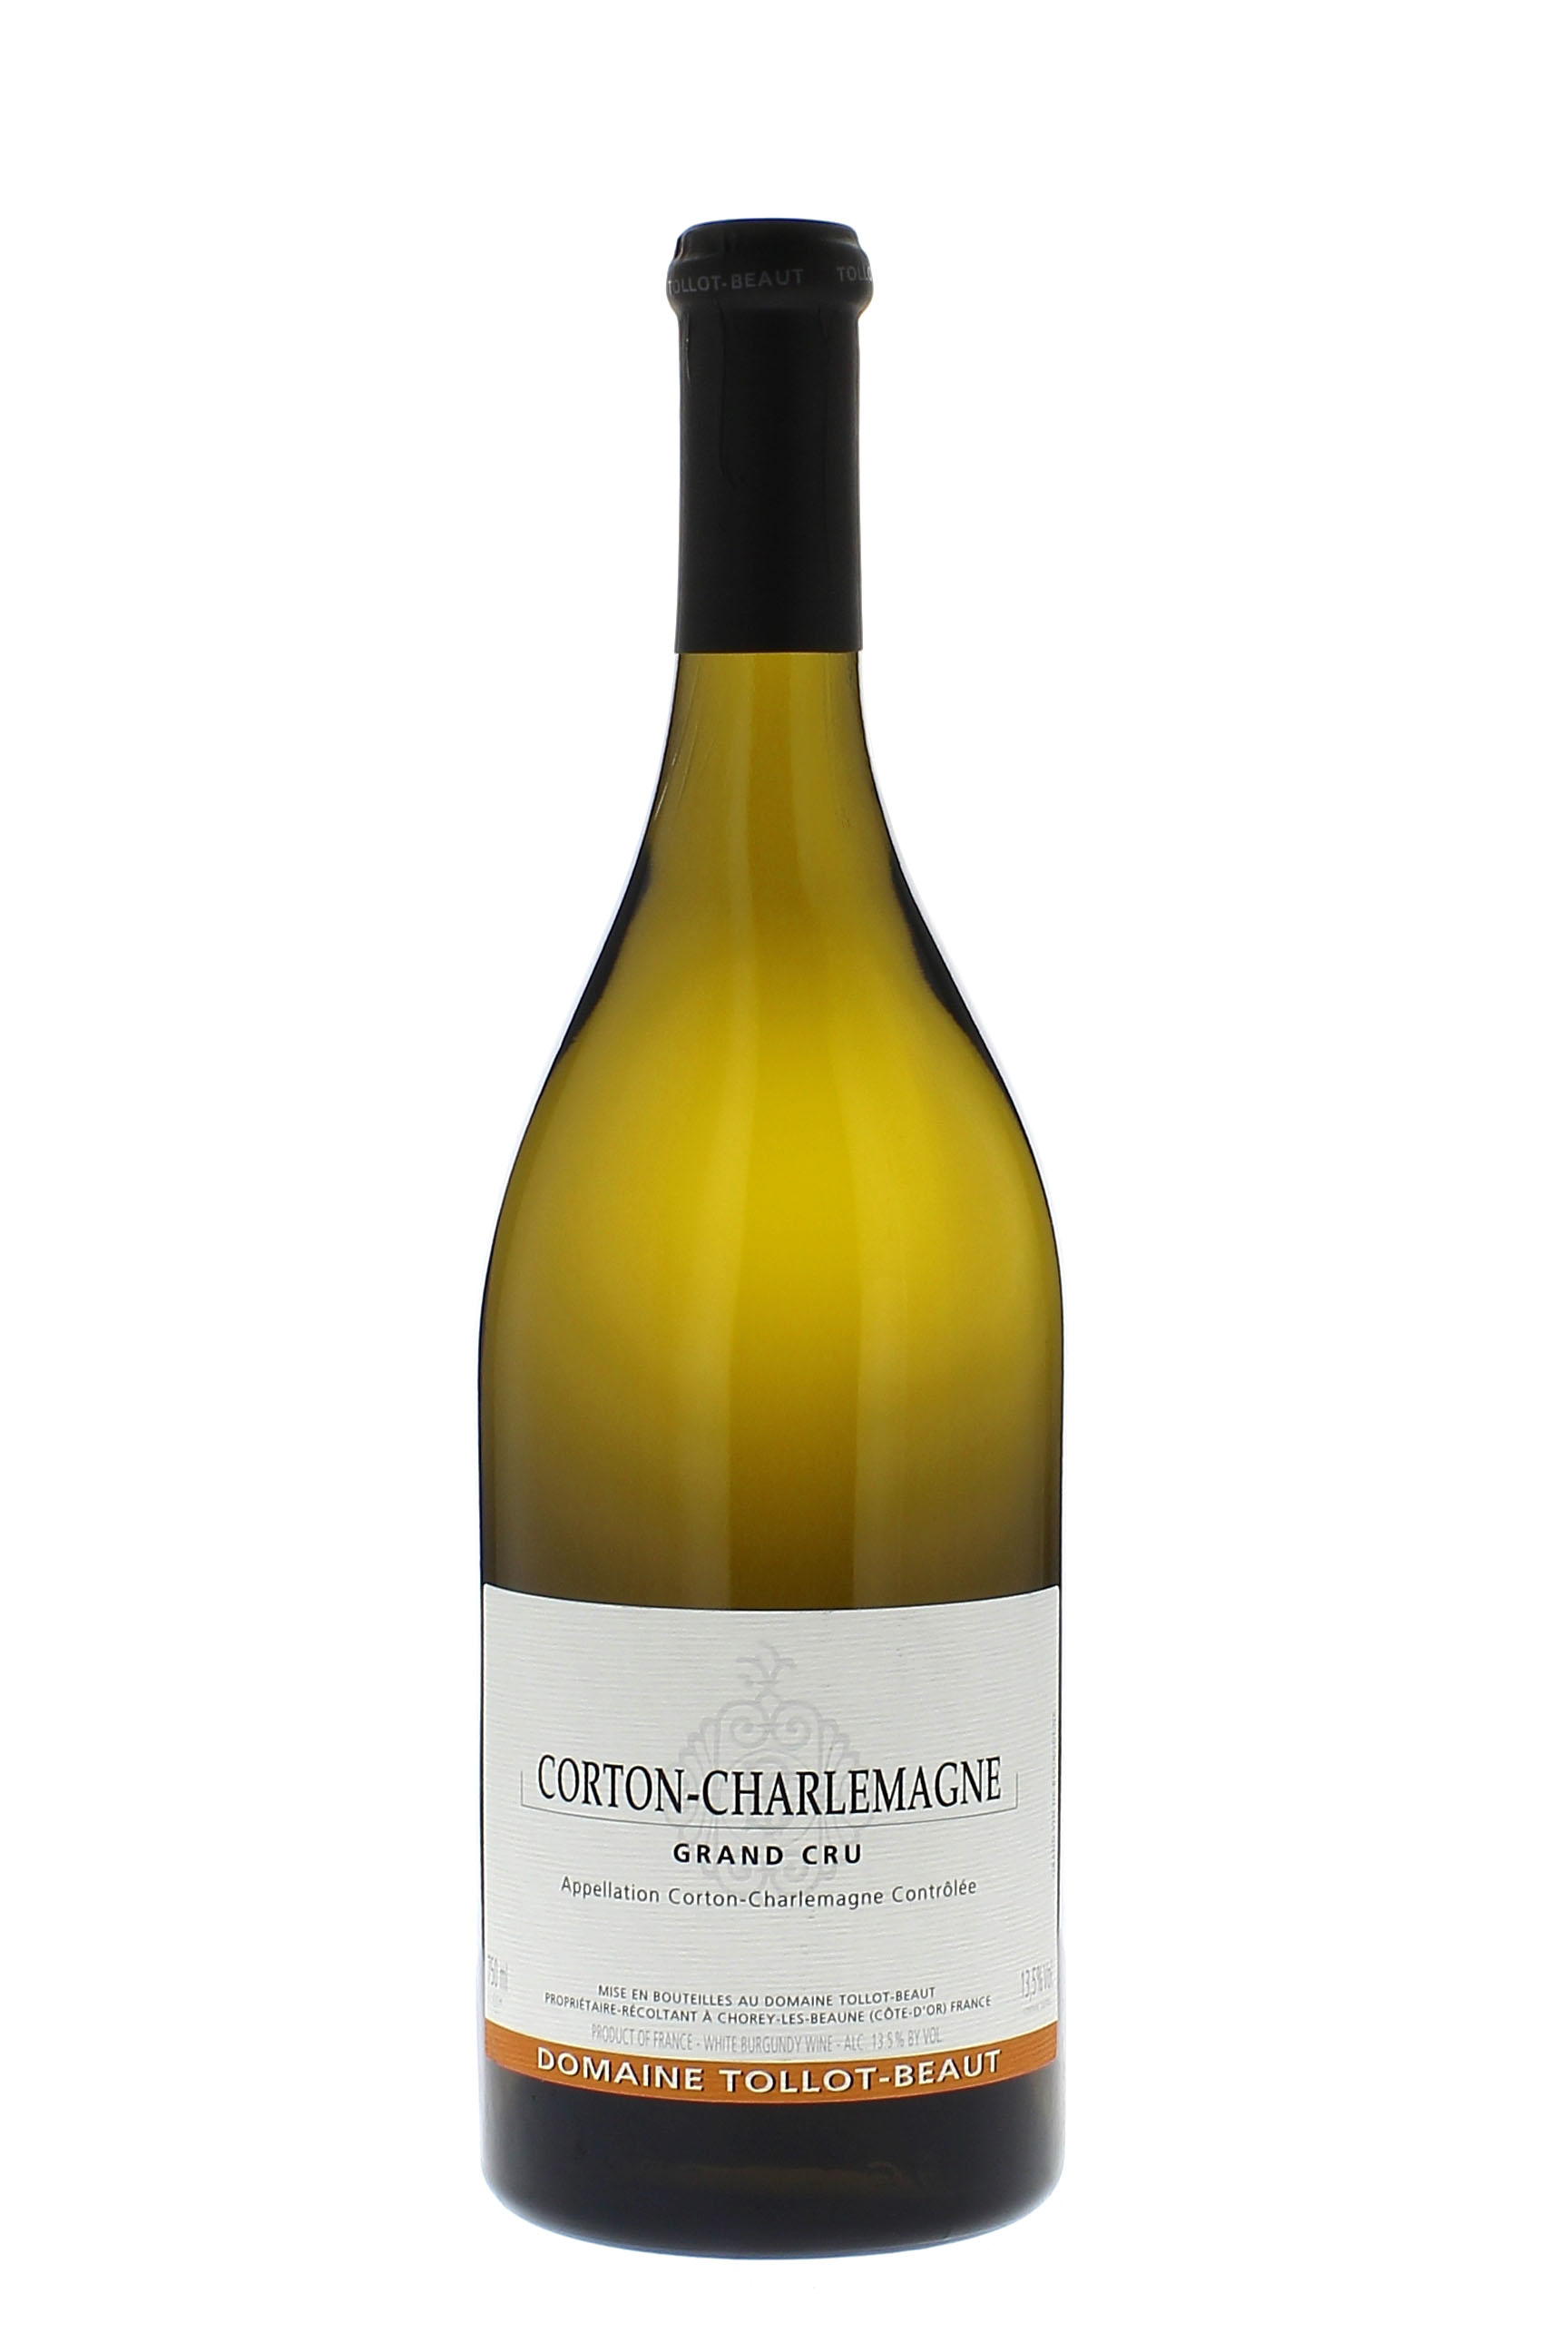 Corton charlemagne 2015 Domaine TOLLOT BEAUT, Bourgogne blanc